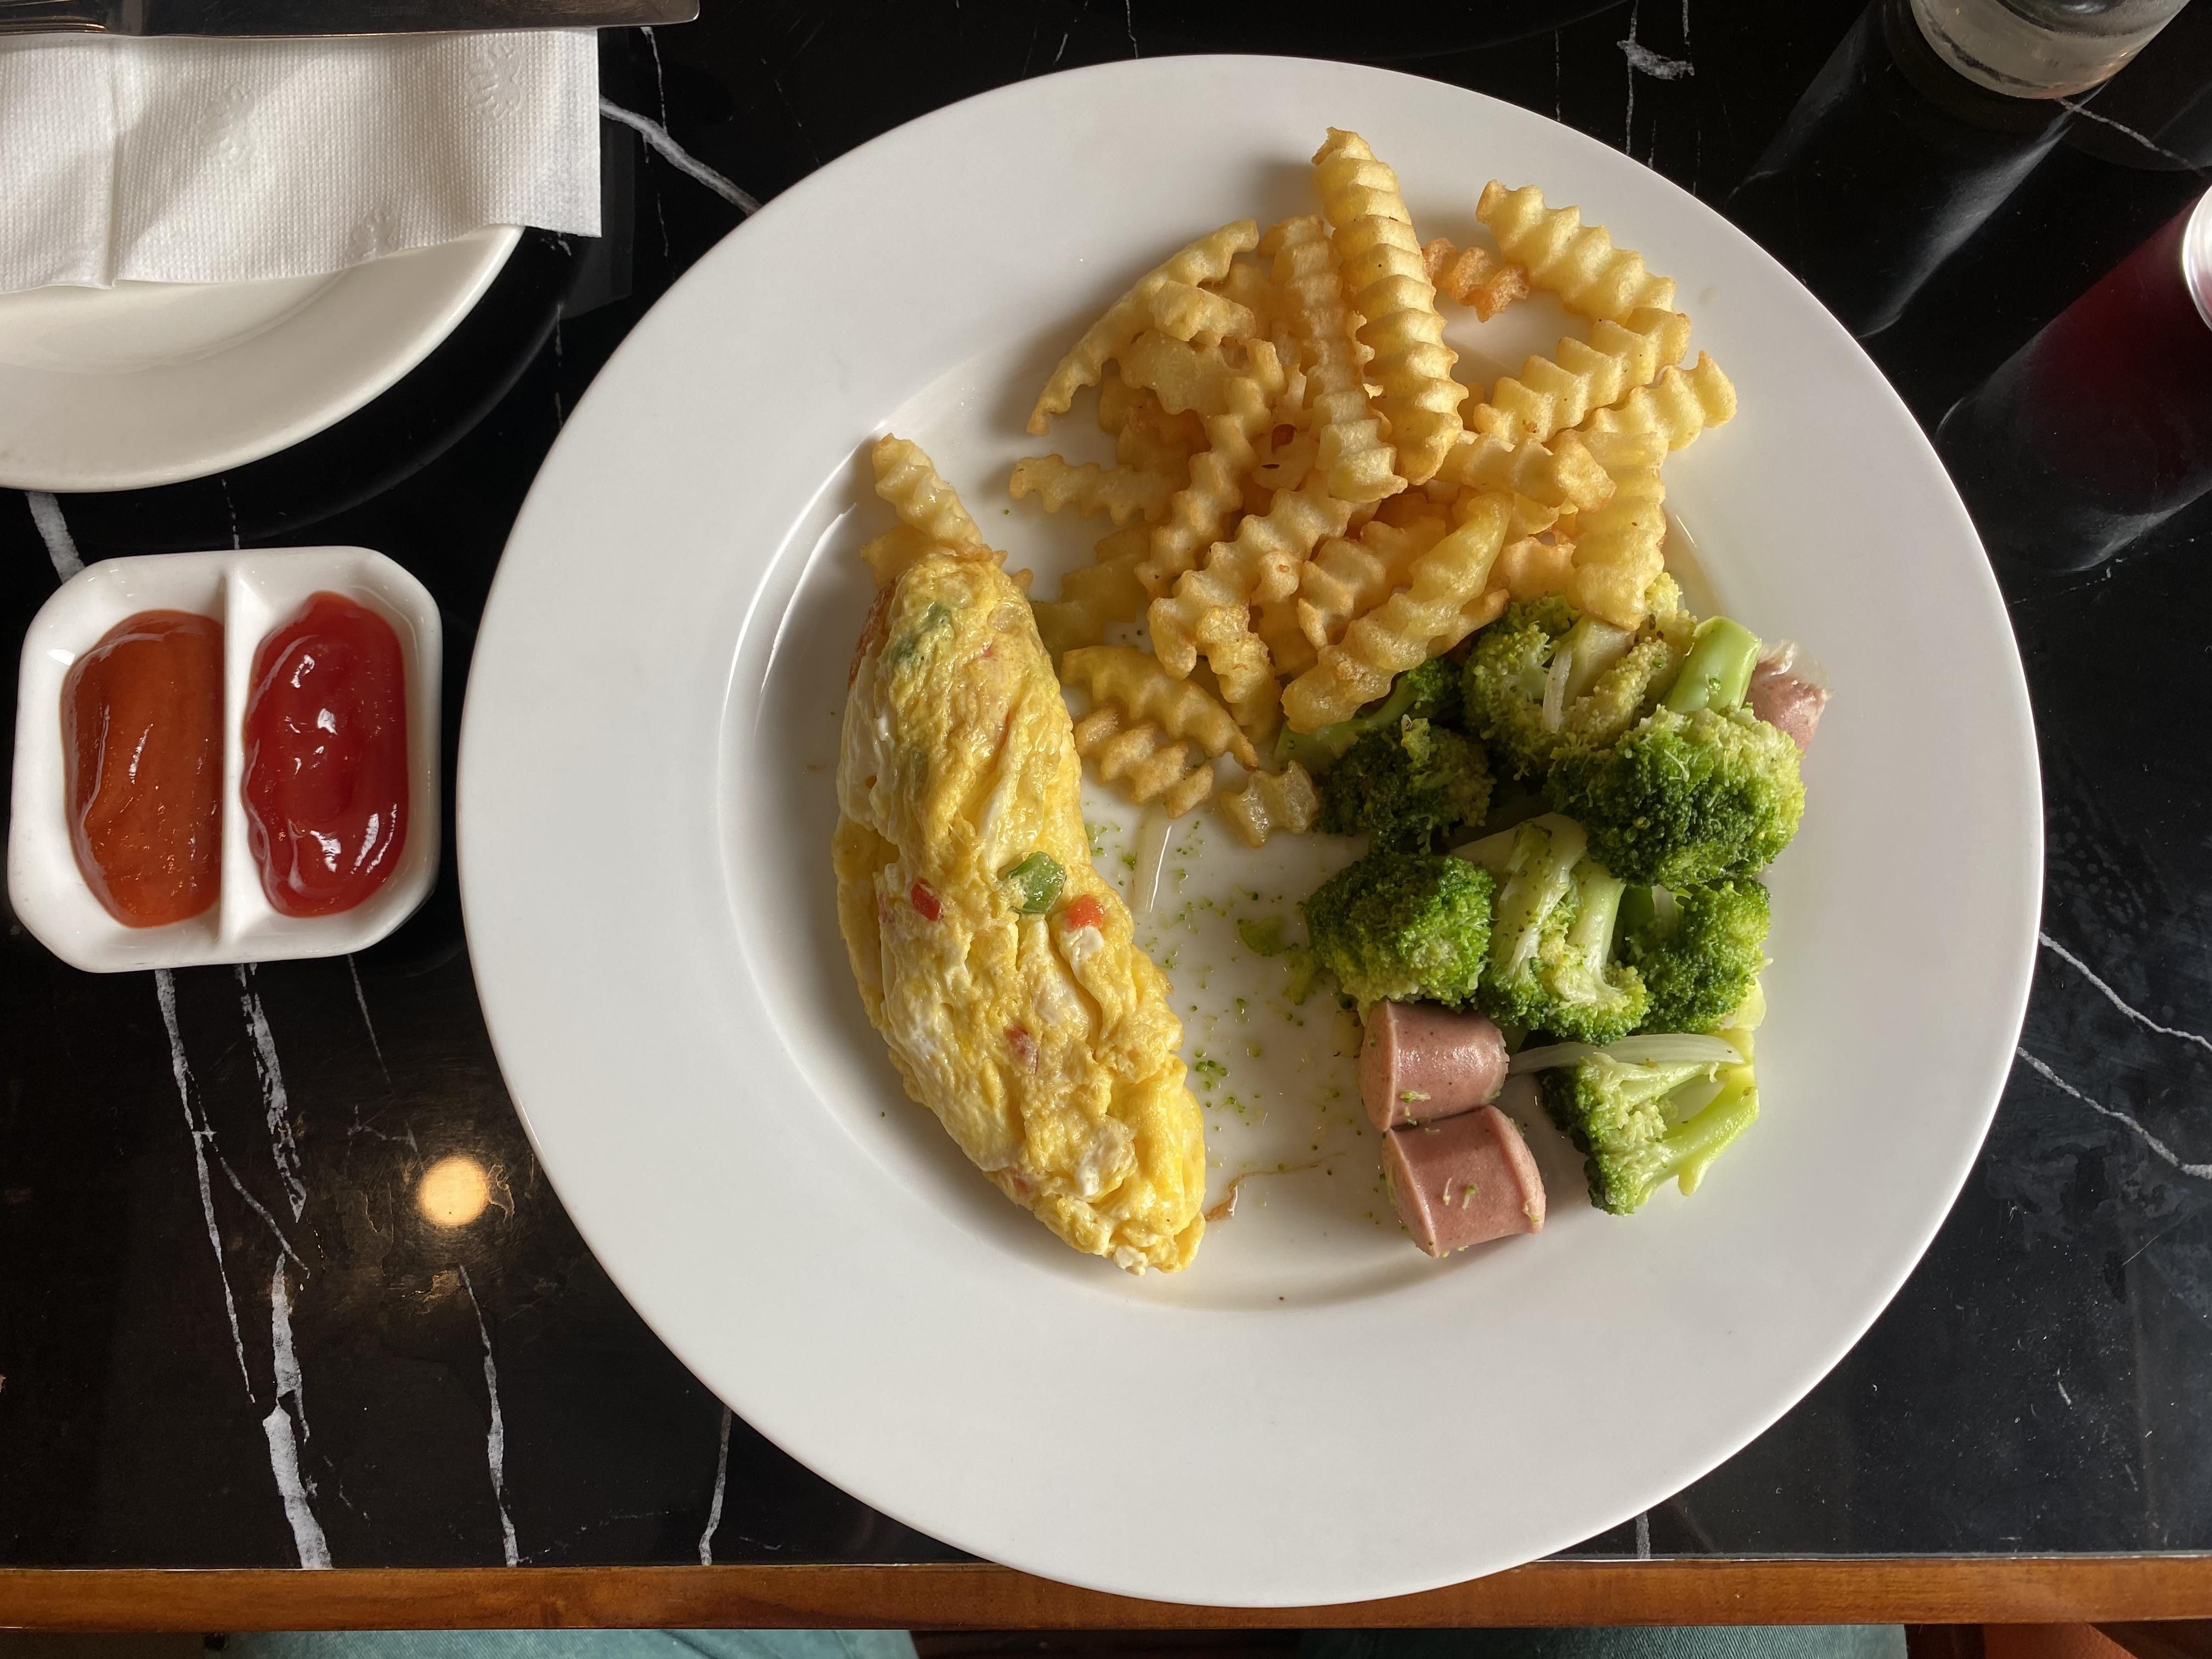 “American Breakfast”, according to a hotel in Sumatra